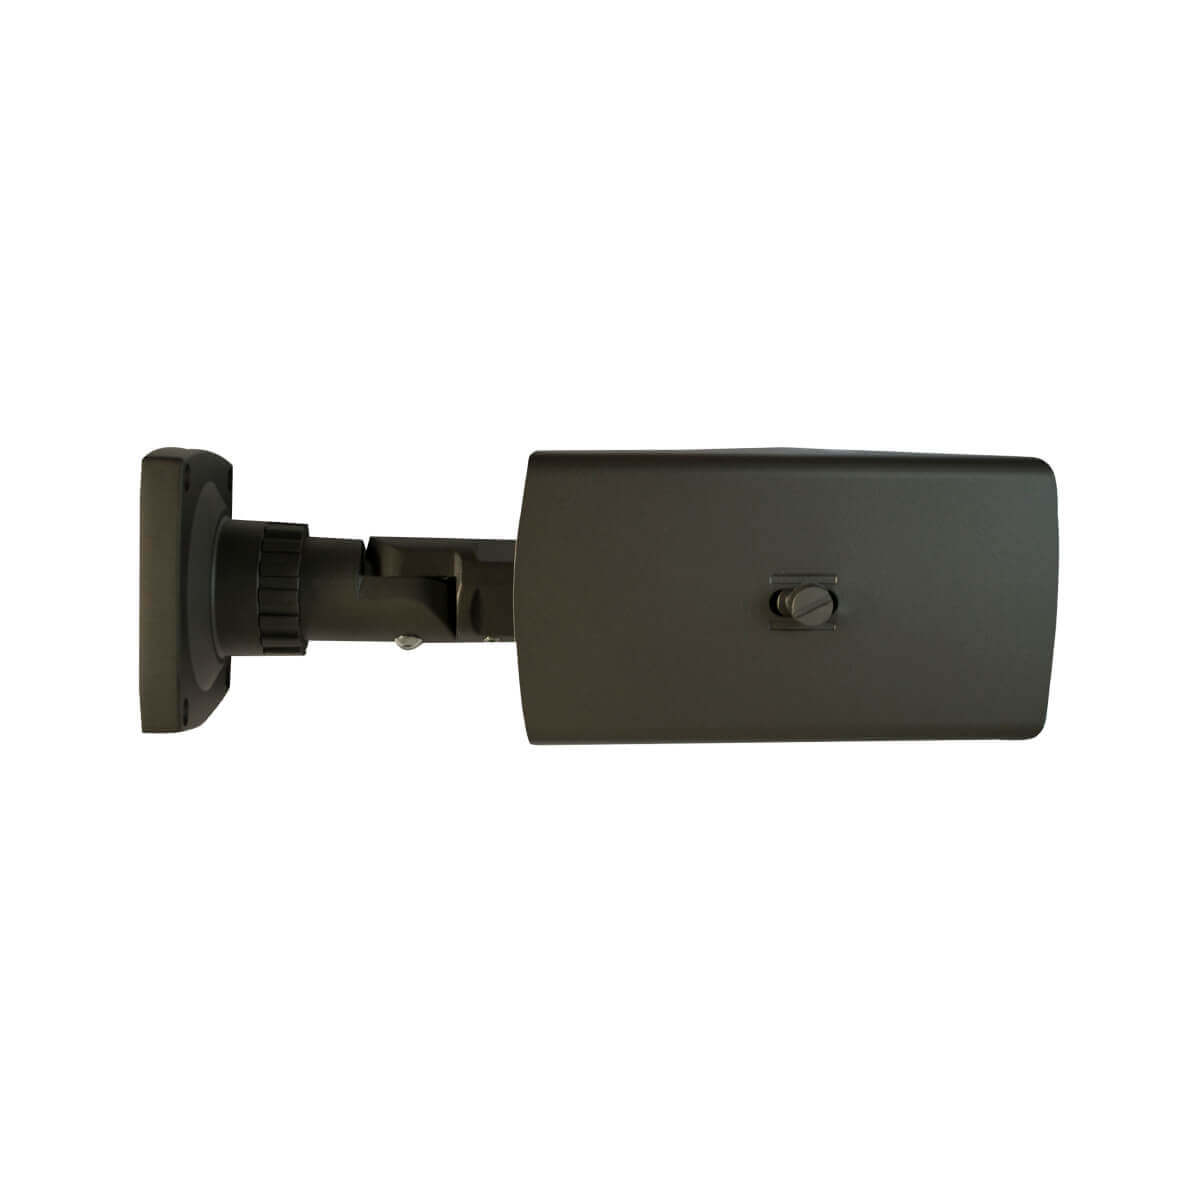 Camara IP tipo bazuca, 1/4 CMOS con sensor dual-core 32bit DSP (TI Davinci DM365), lente 8mm